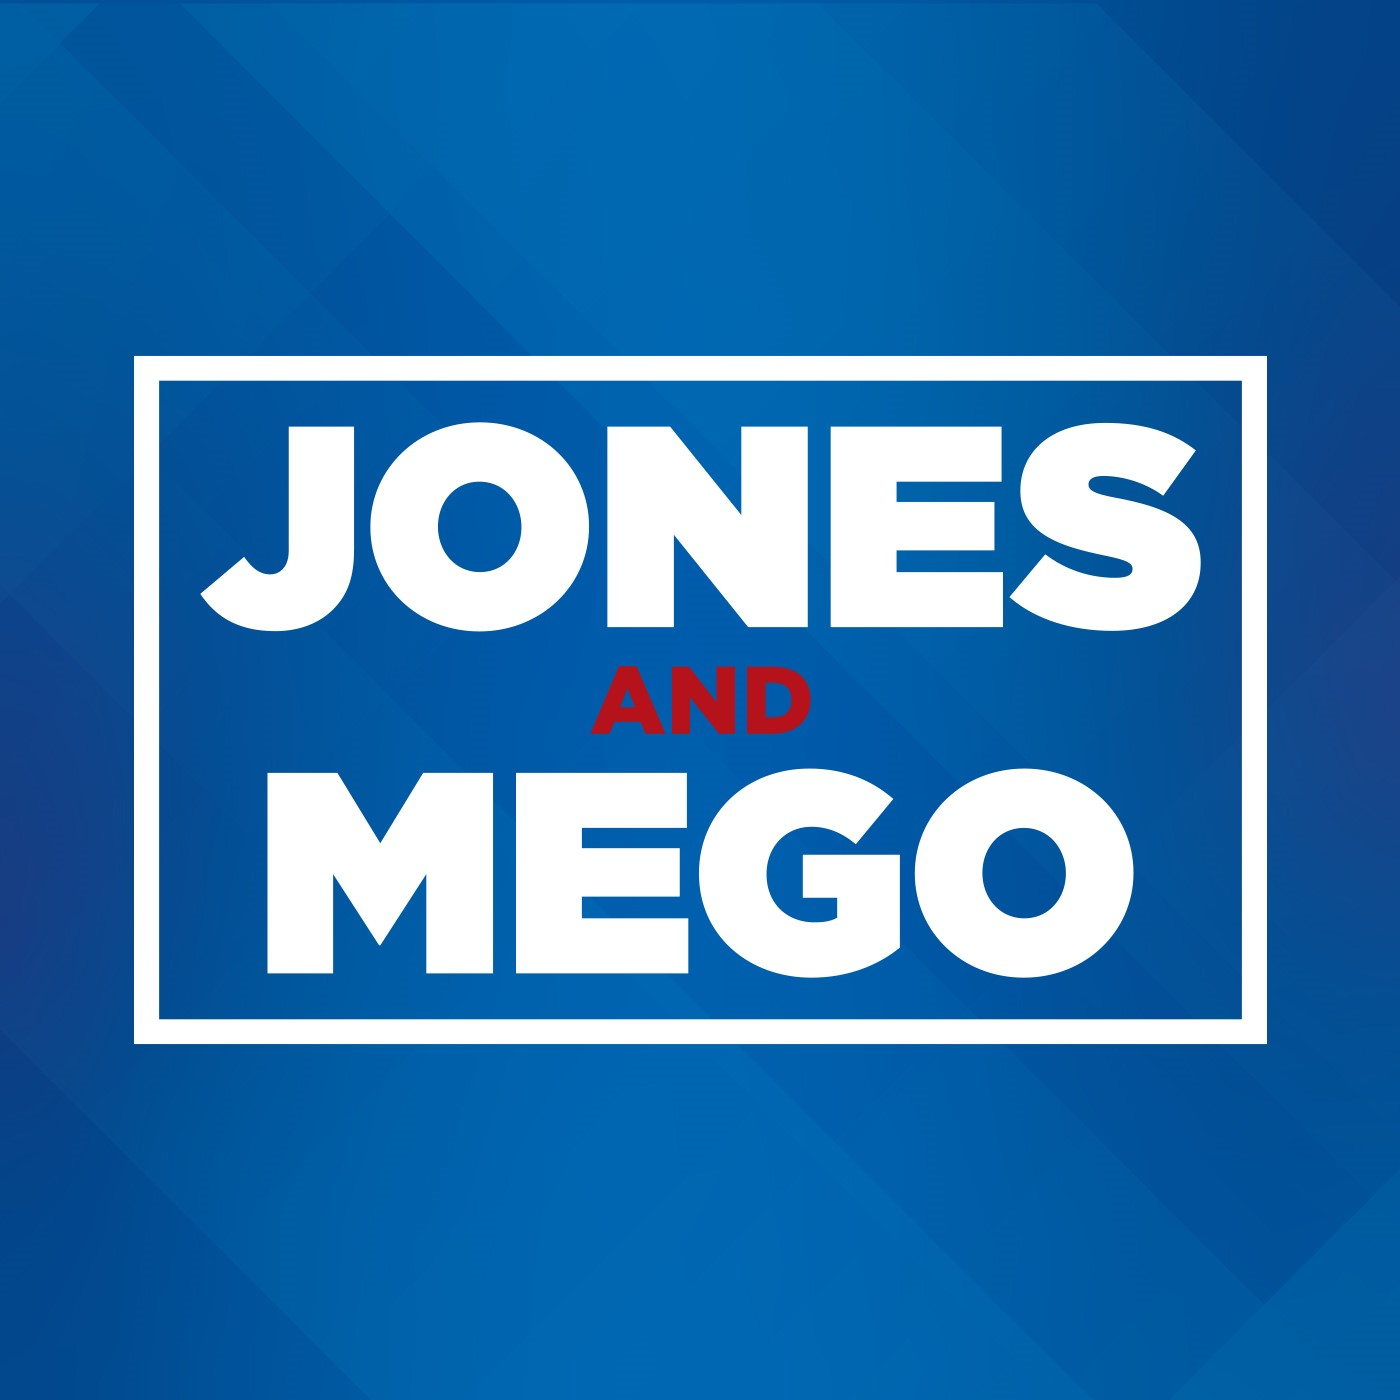 Jones and Mego are not fans of Tony Romo!